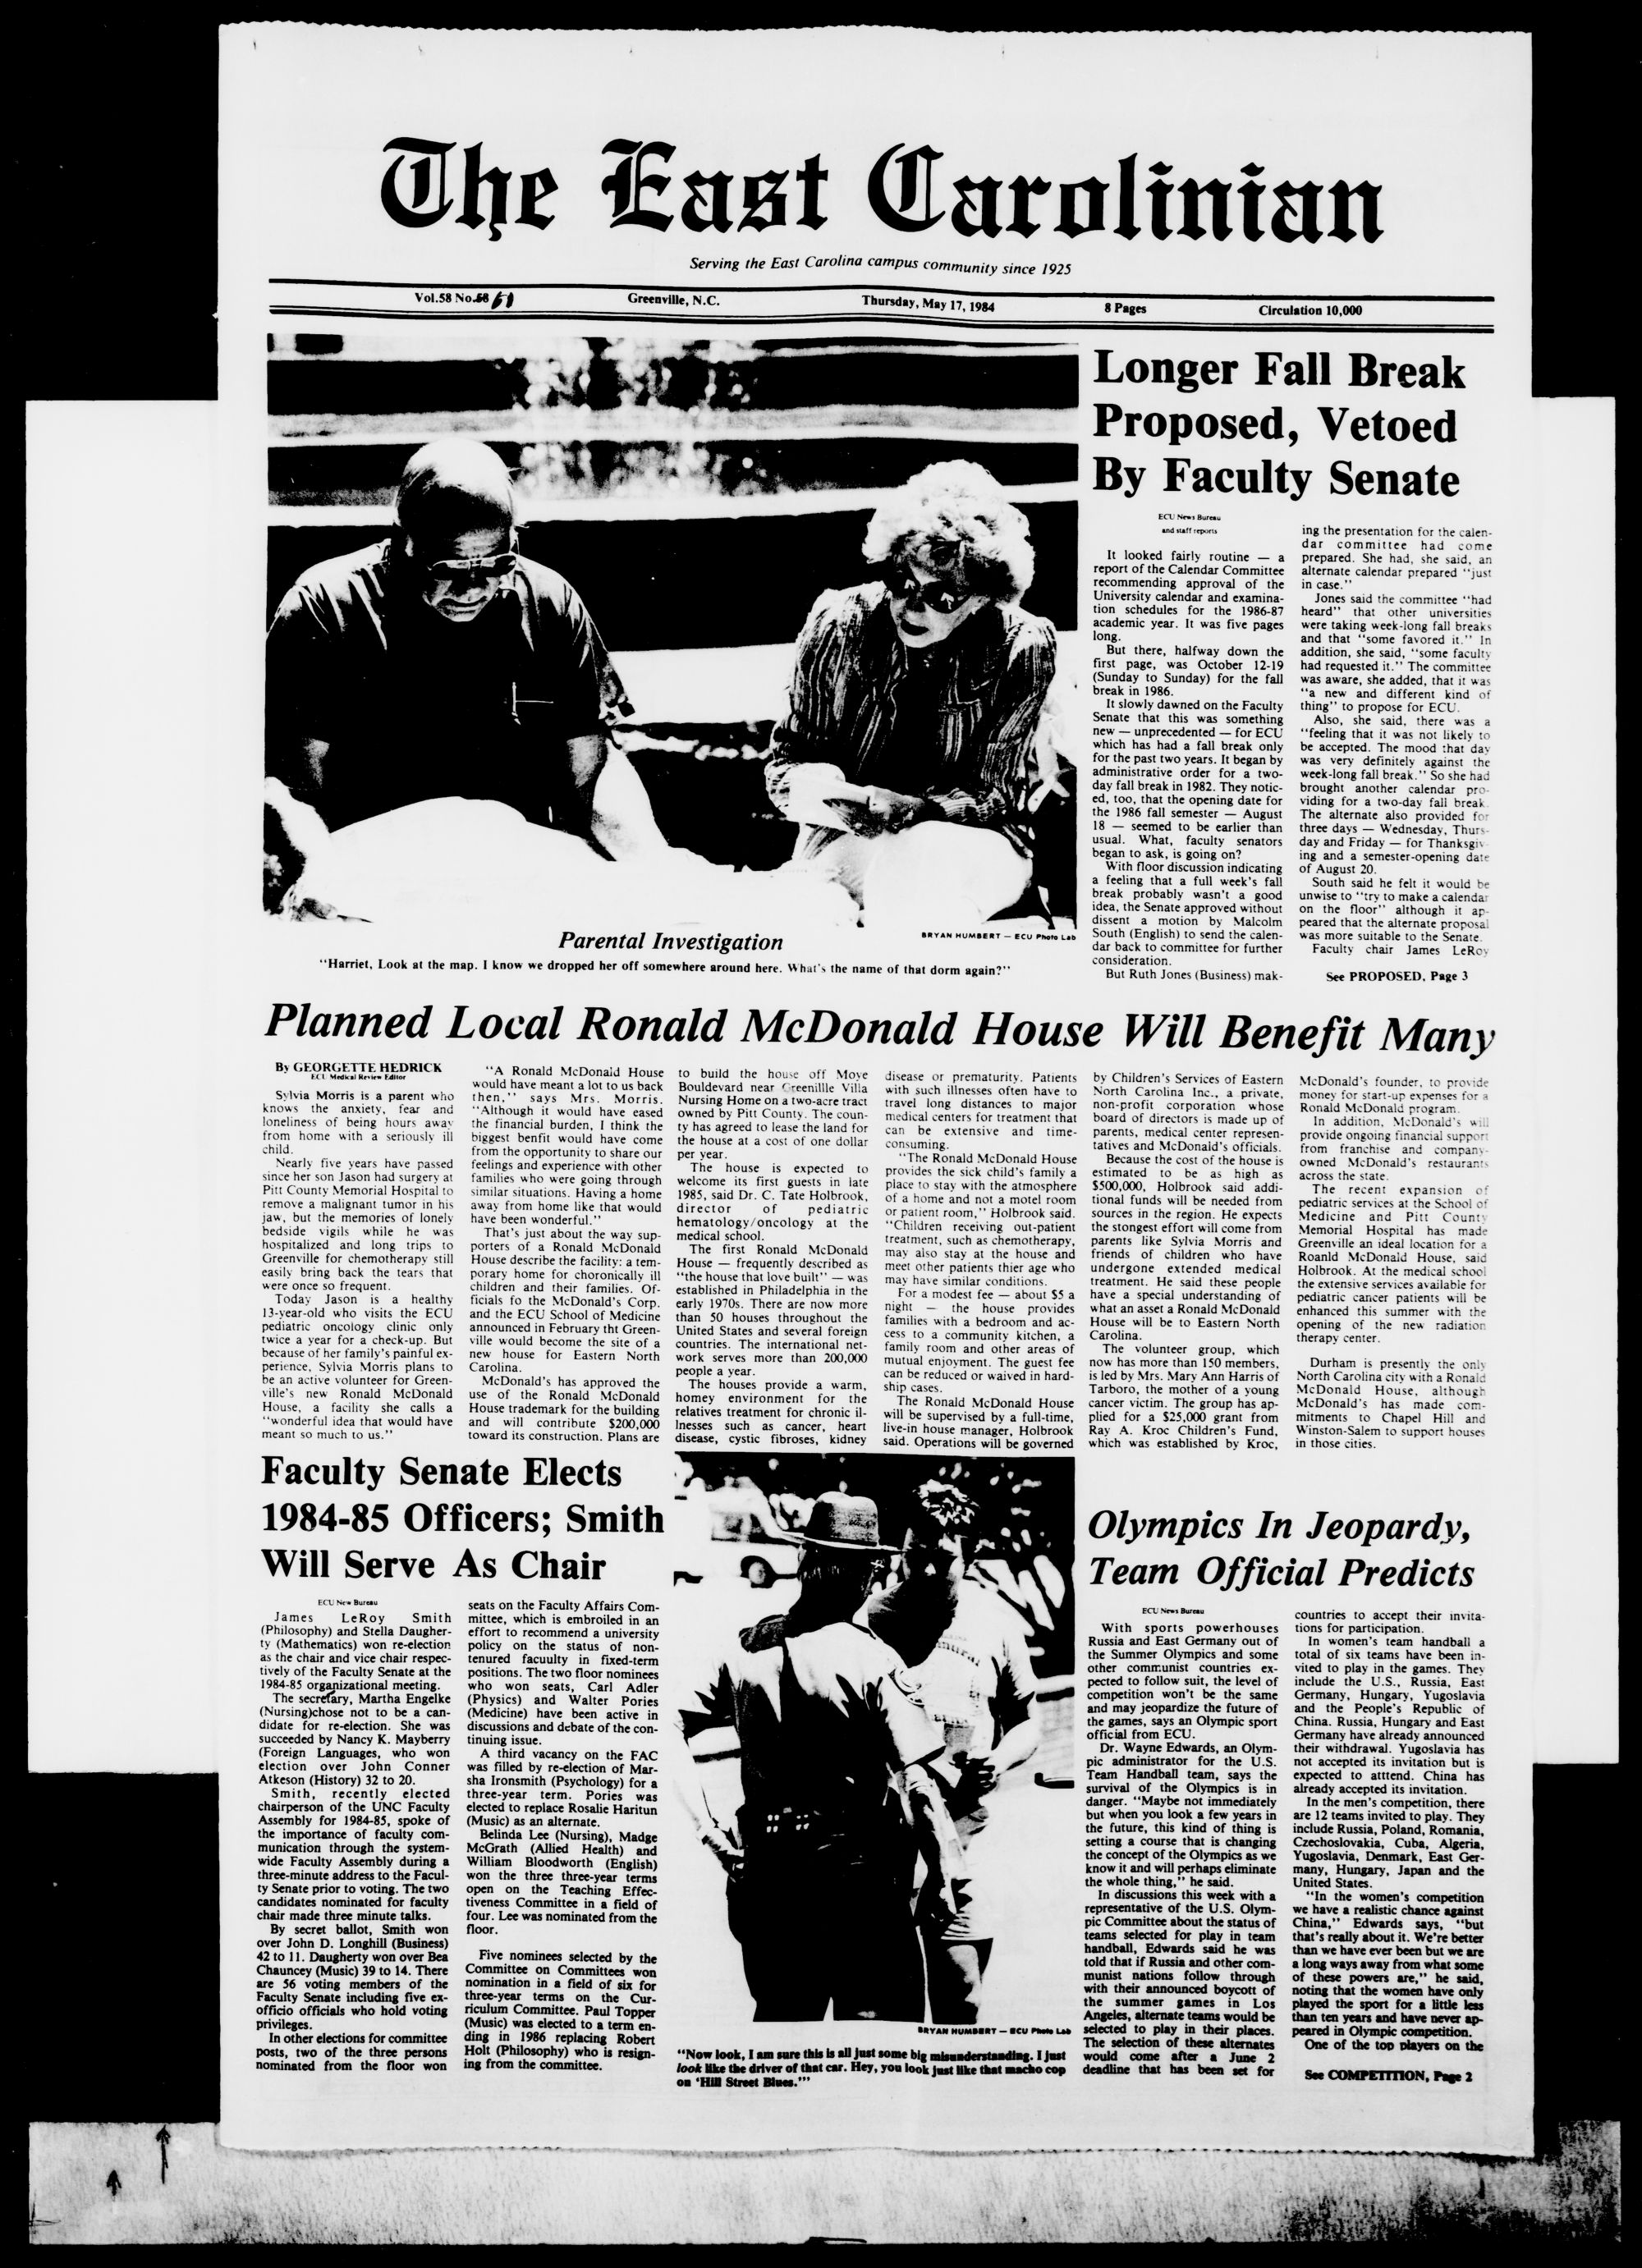 The East Carolinian, May 17, 1984